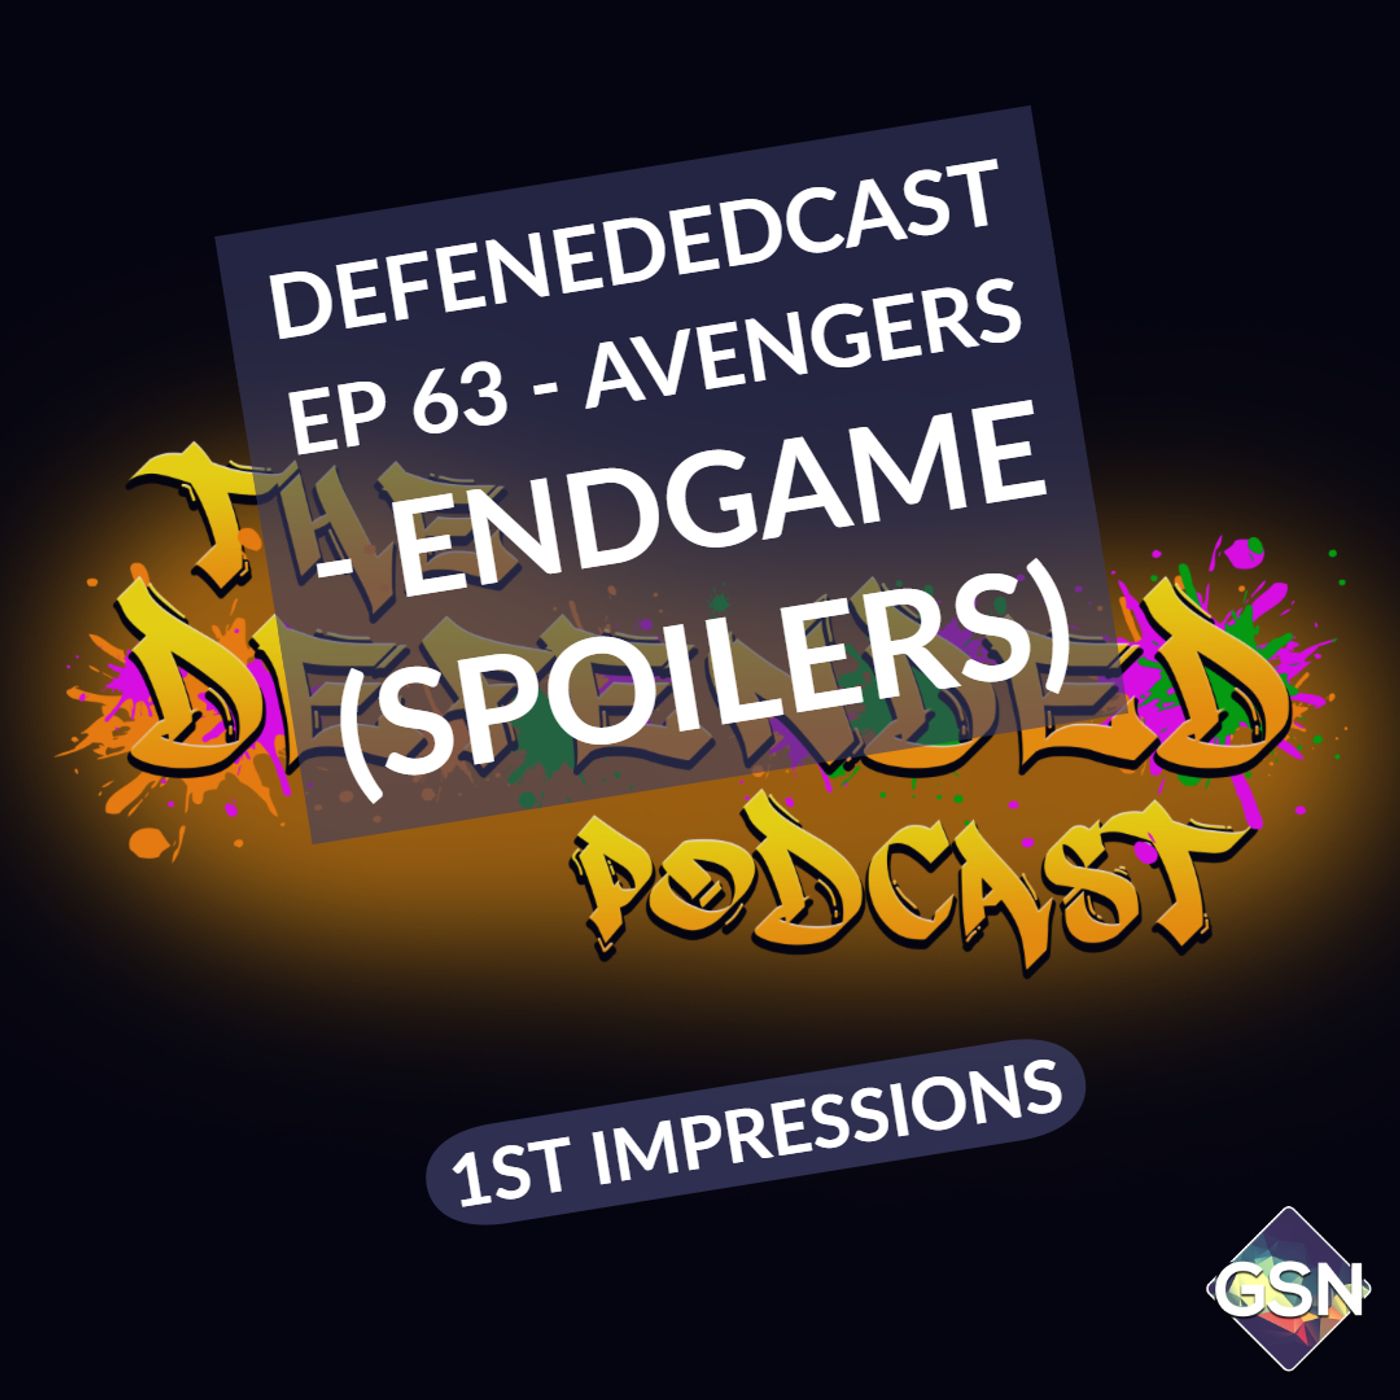 Defenededcast Ep 63 - Avengers - Endgame (Spoilers)